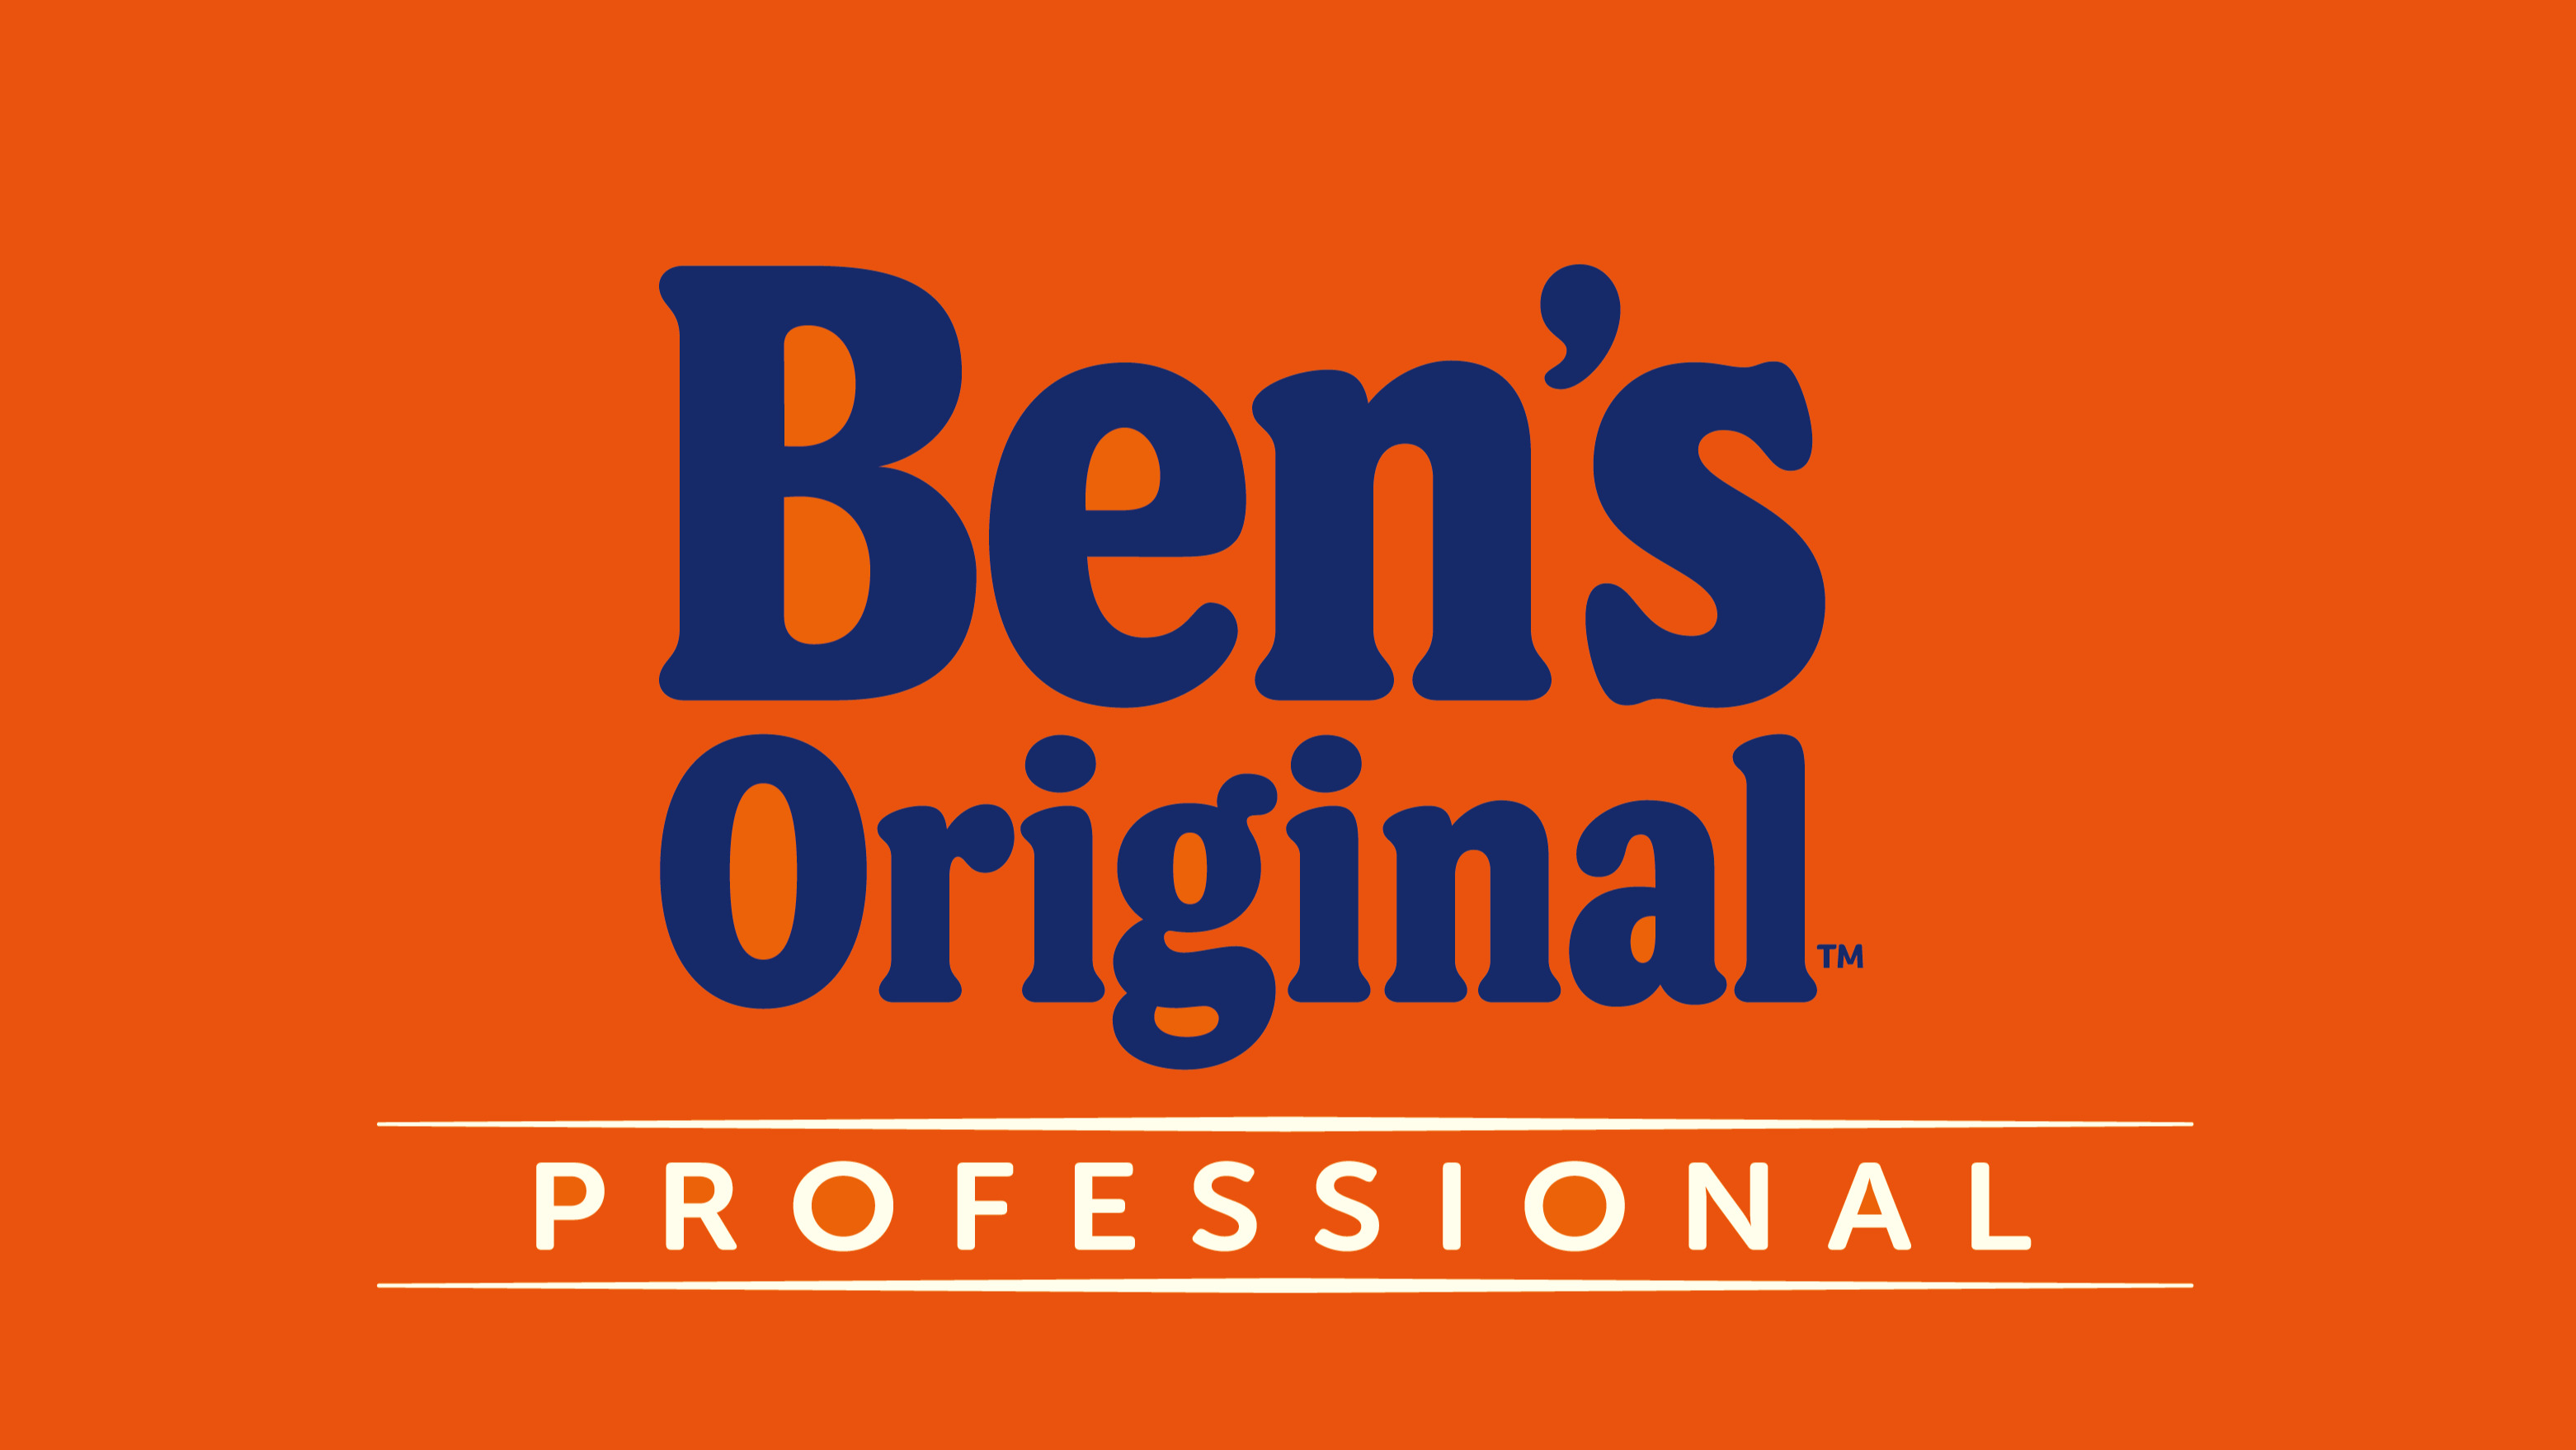 Image Ben's Original Professional Logo